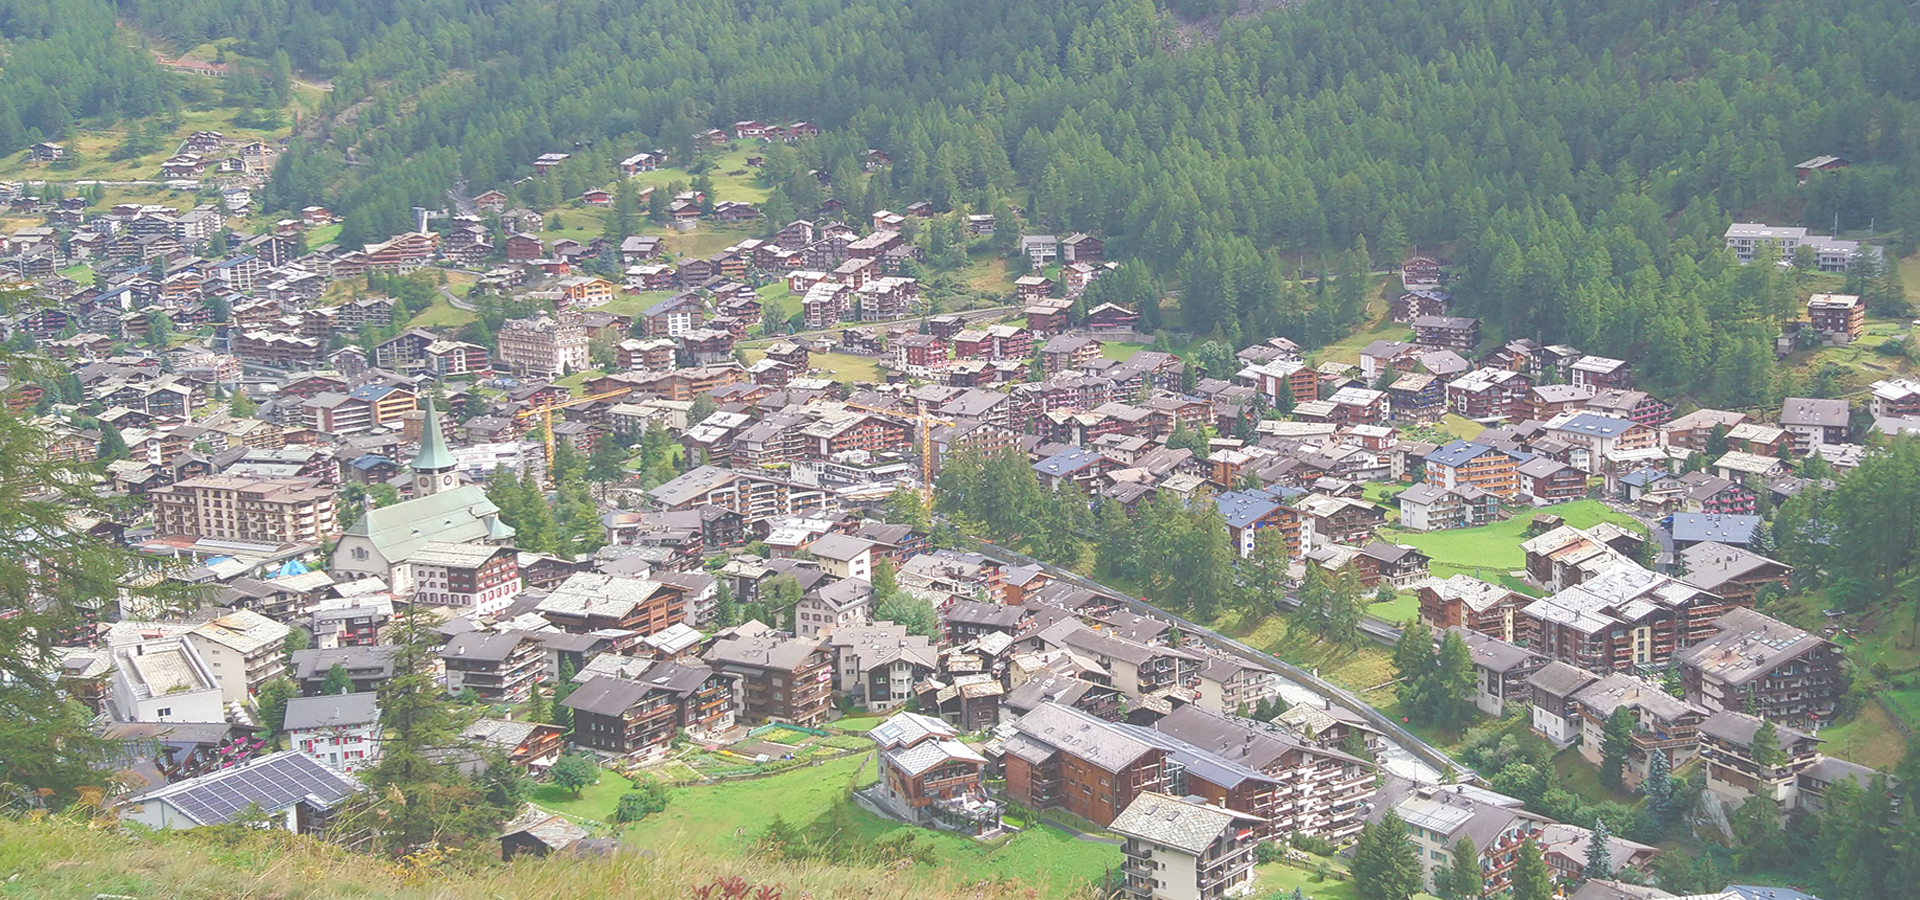 <b>Zermatt, Canton of Valais, Switzerland</b>